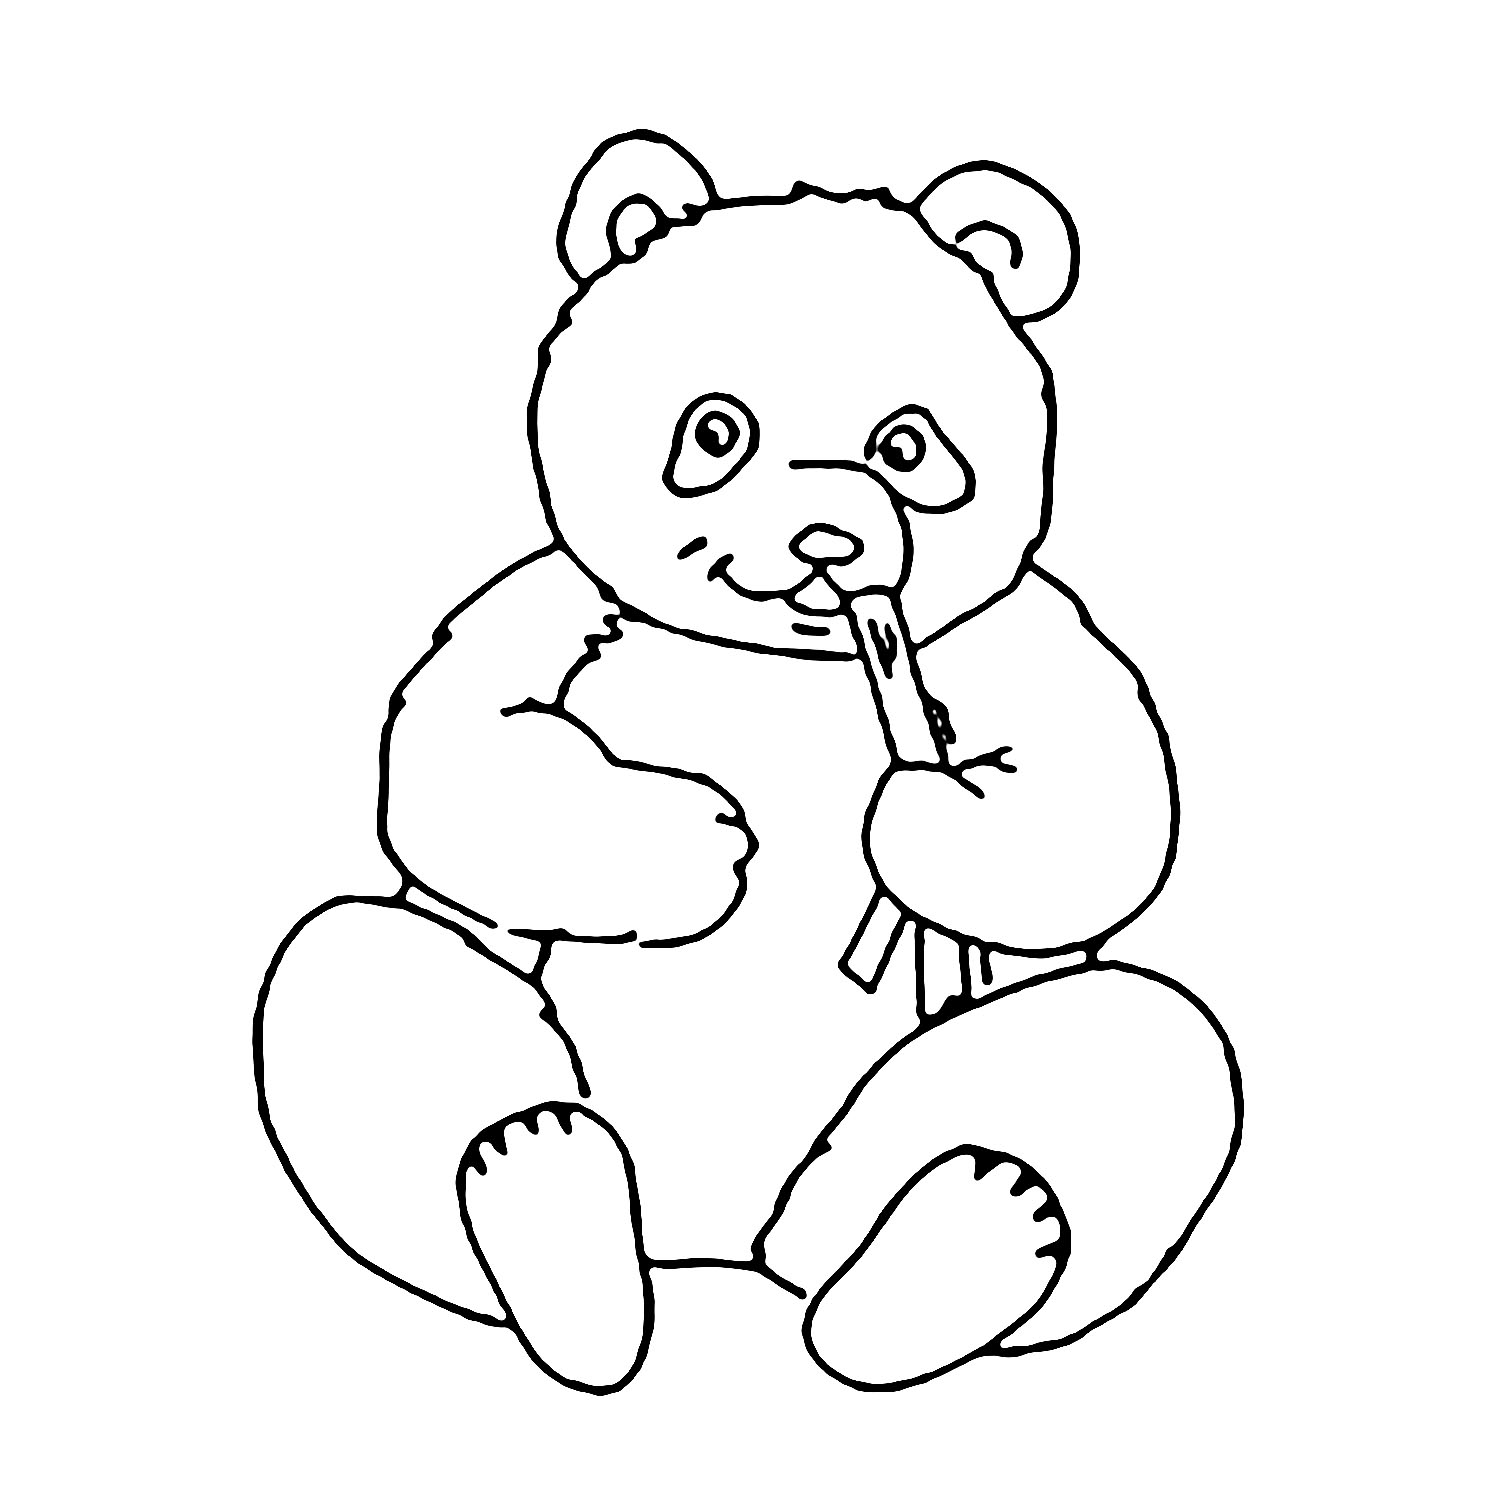 Pandas to print - Pandas Kids Coloring Pages